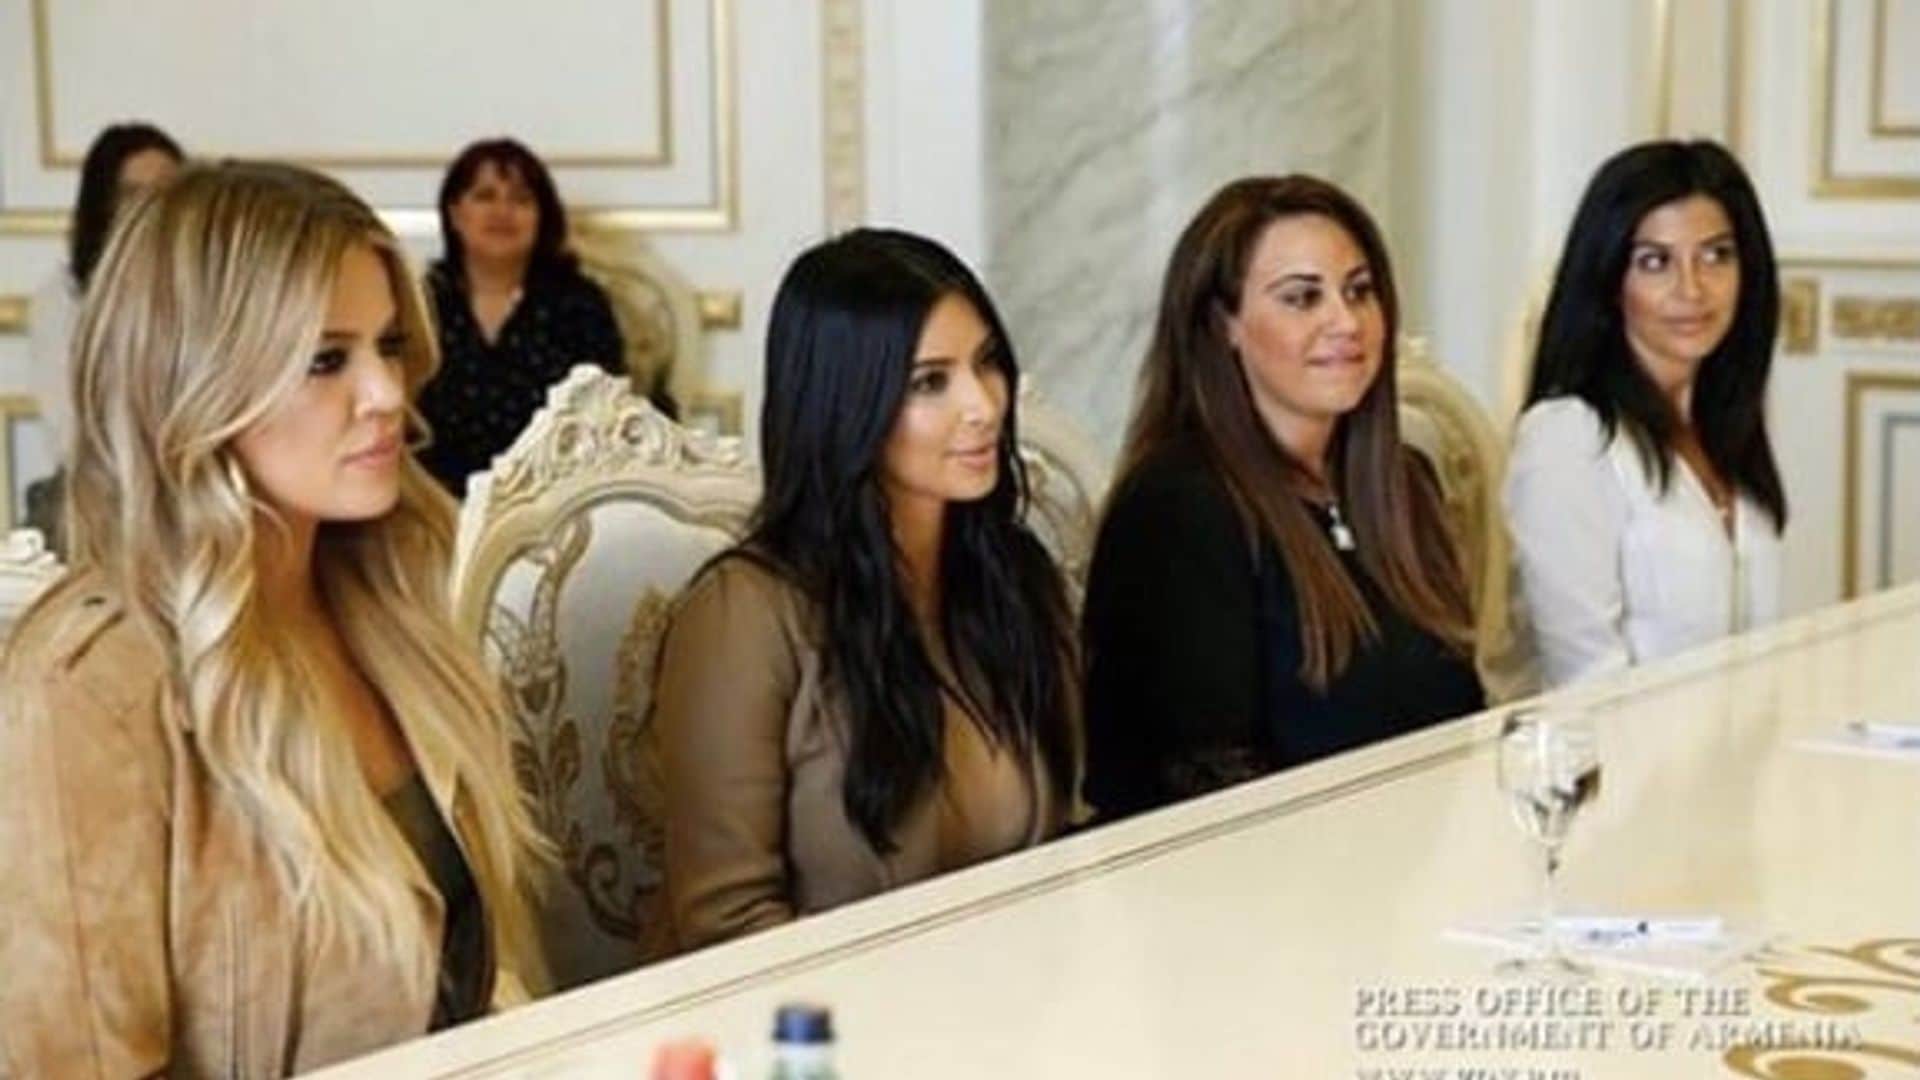 Khloe, Kim and their cousins
Photo: Instagram